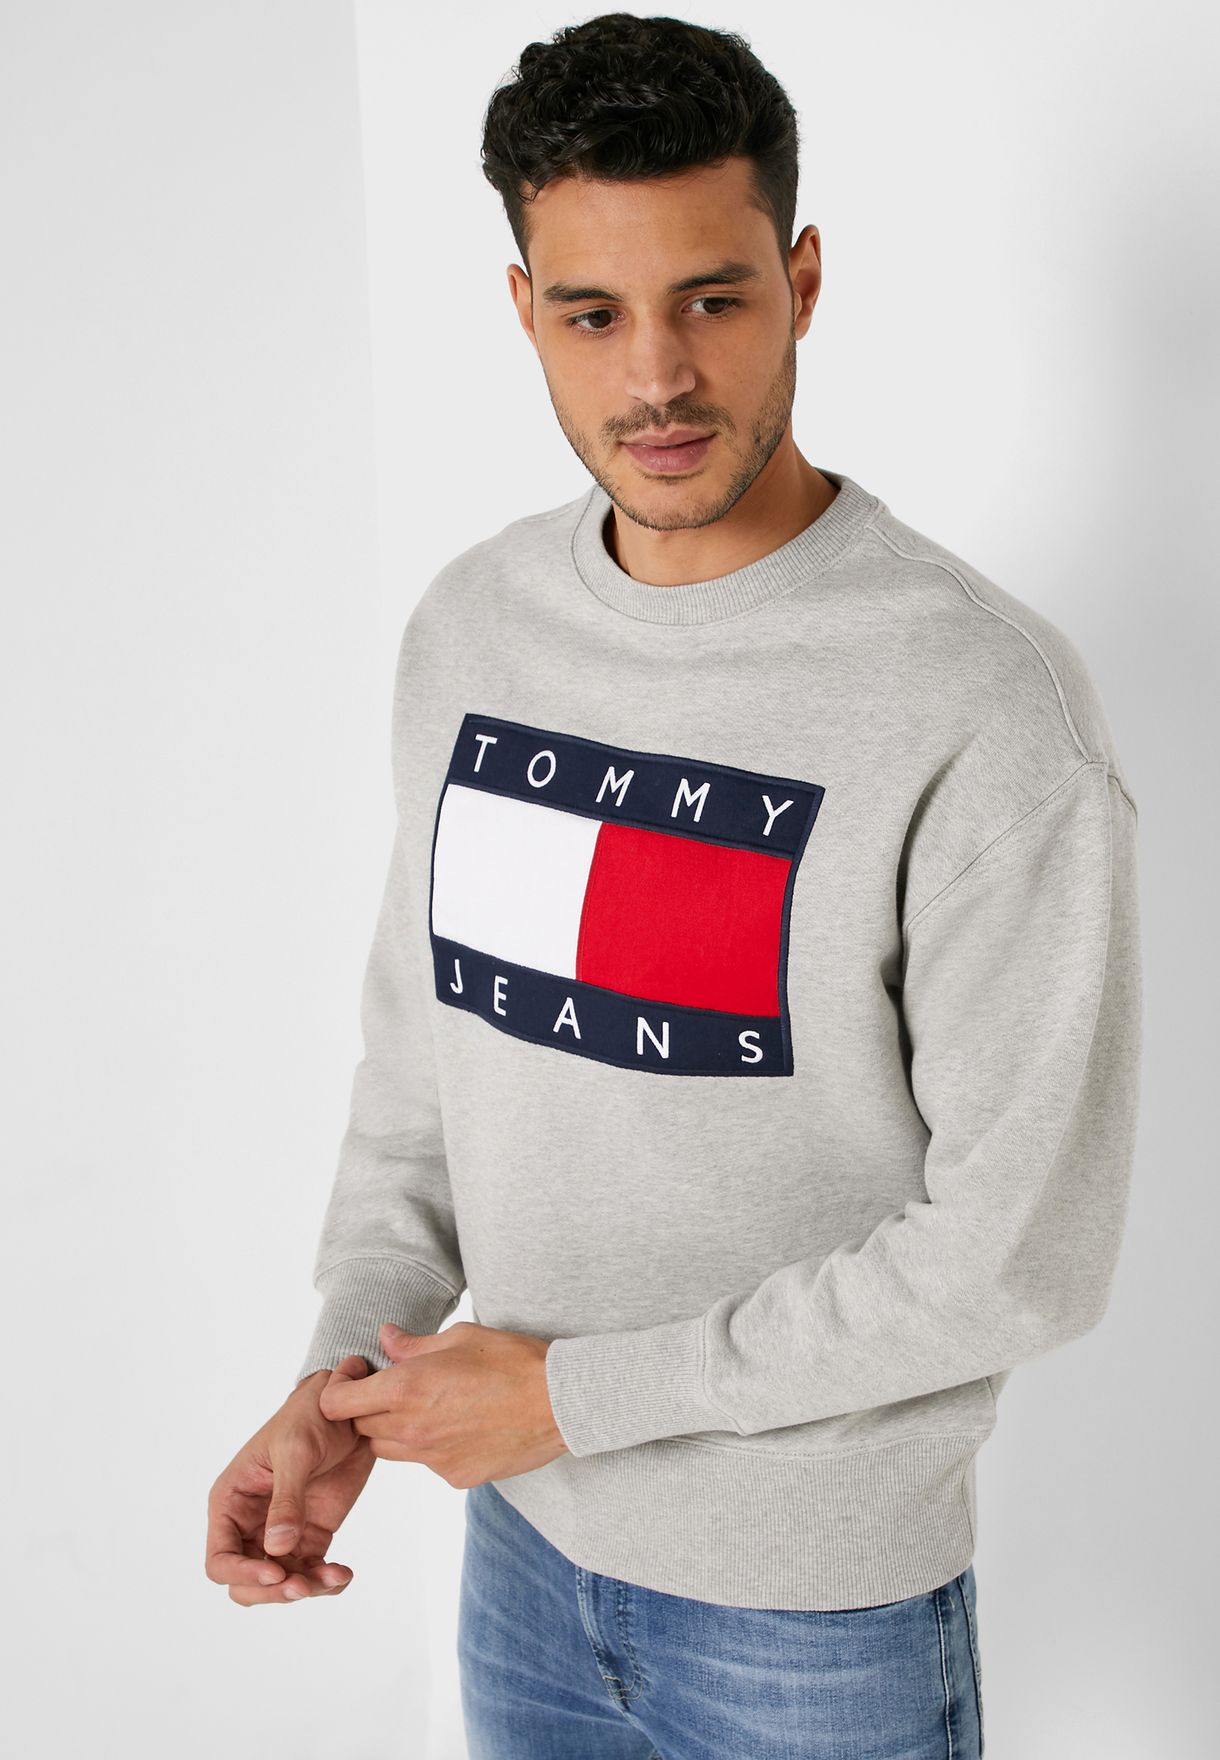 tommy flag sweatshirt